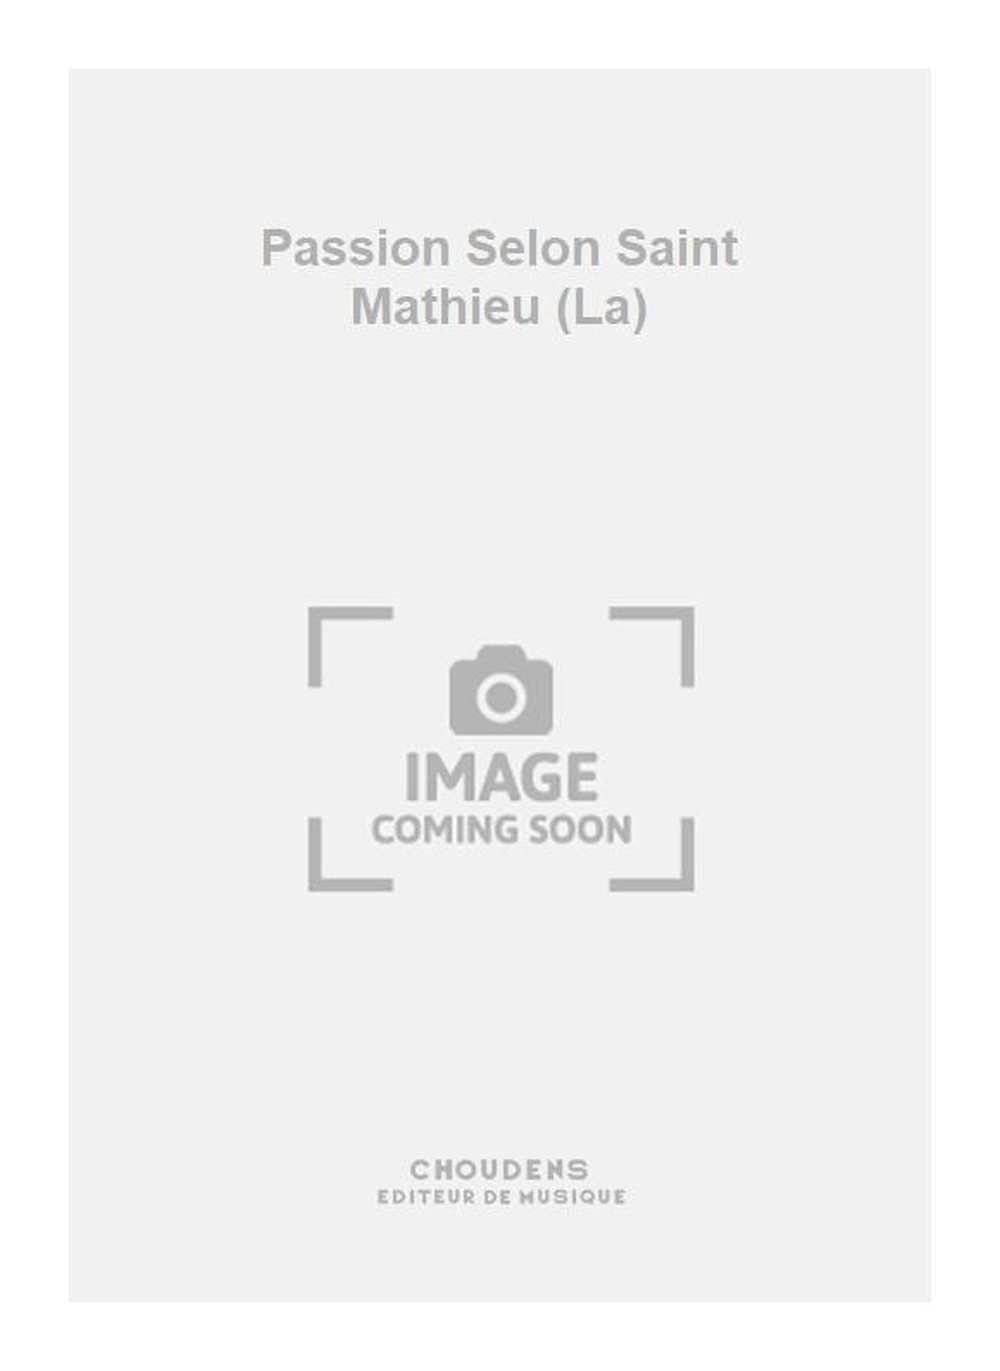 Johann Sebastian Bach: Passion Selon Saint Mathieu (La)